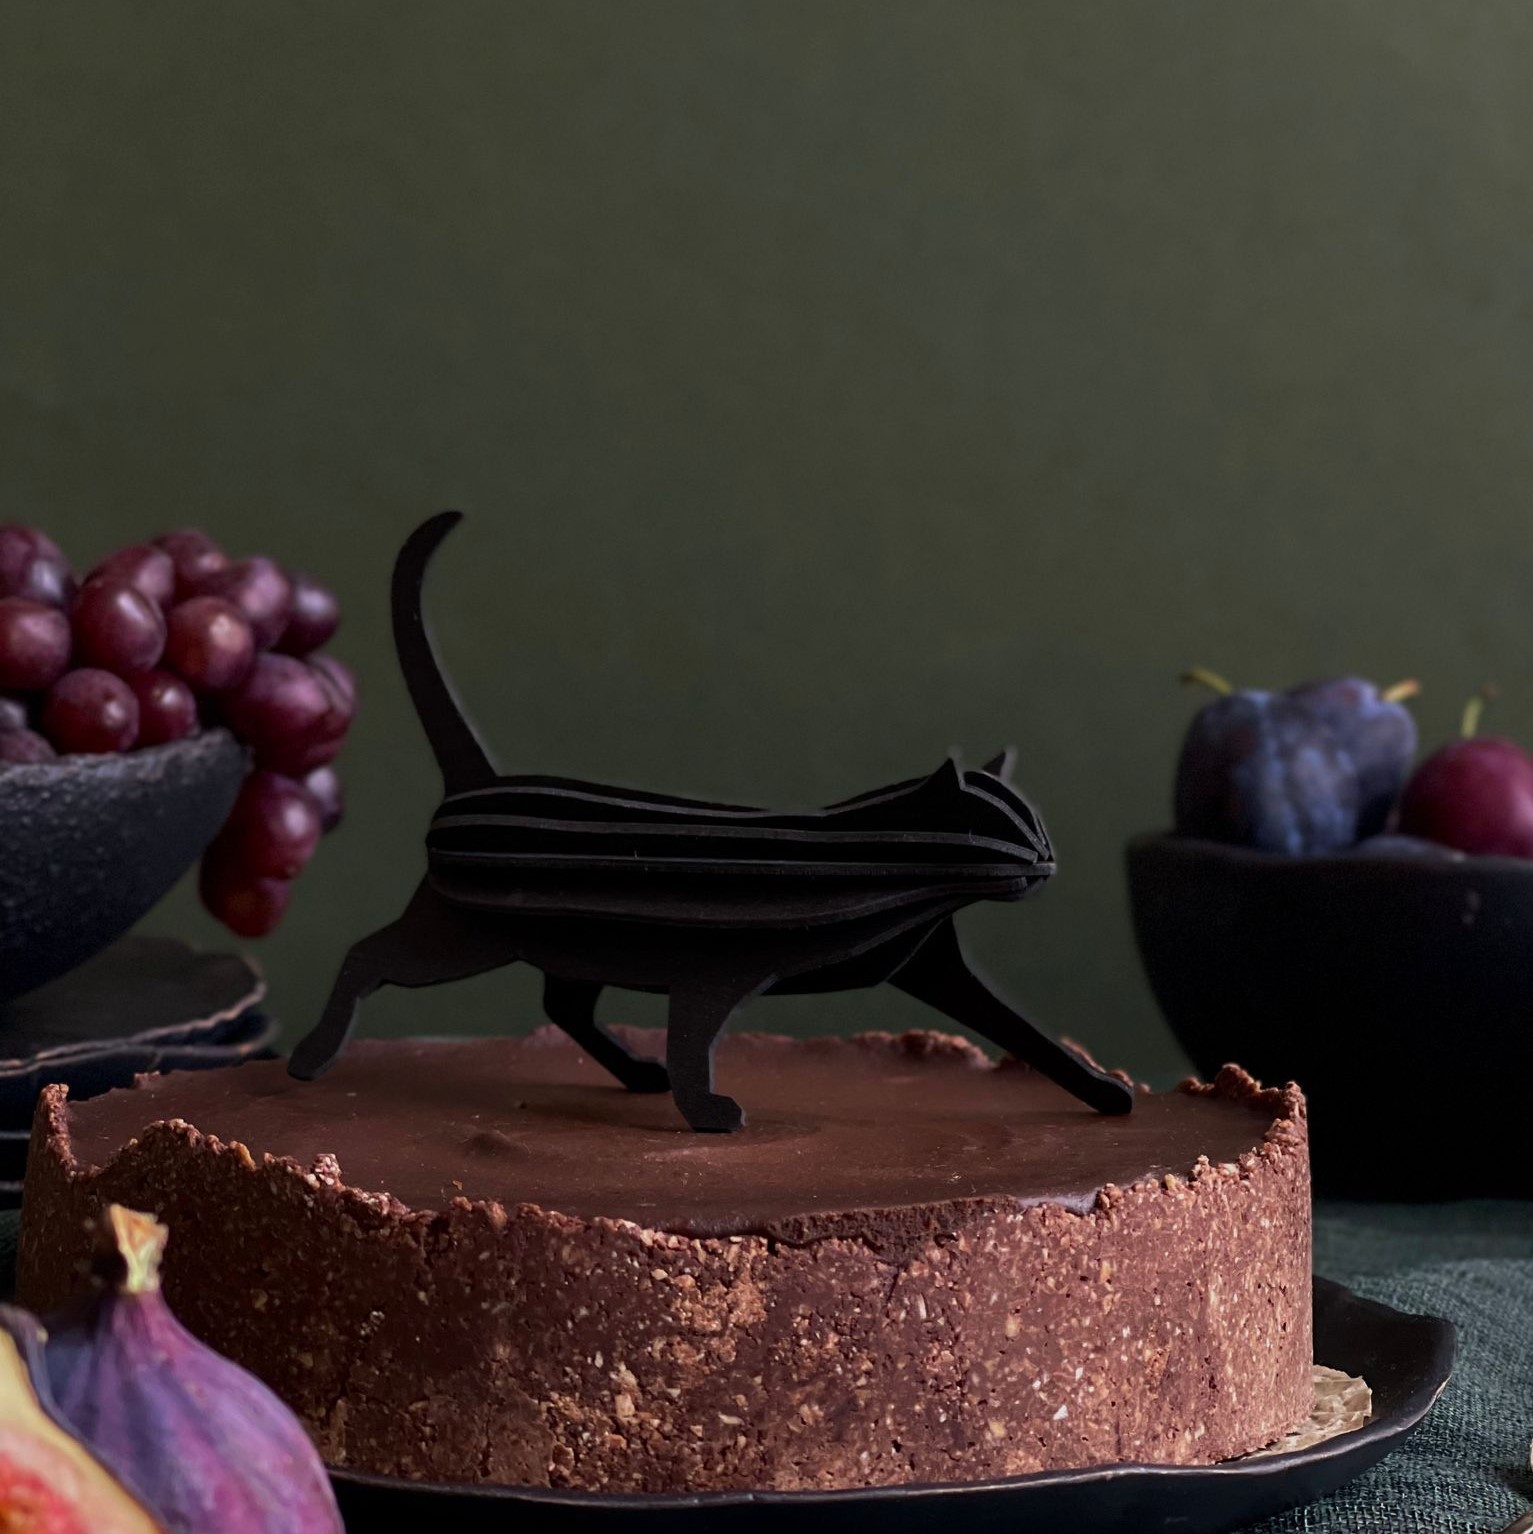 Wooden Lovi Cat on cake.